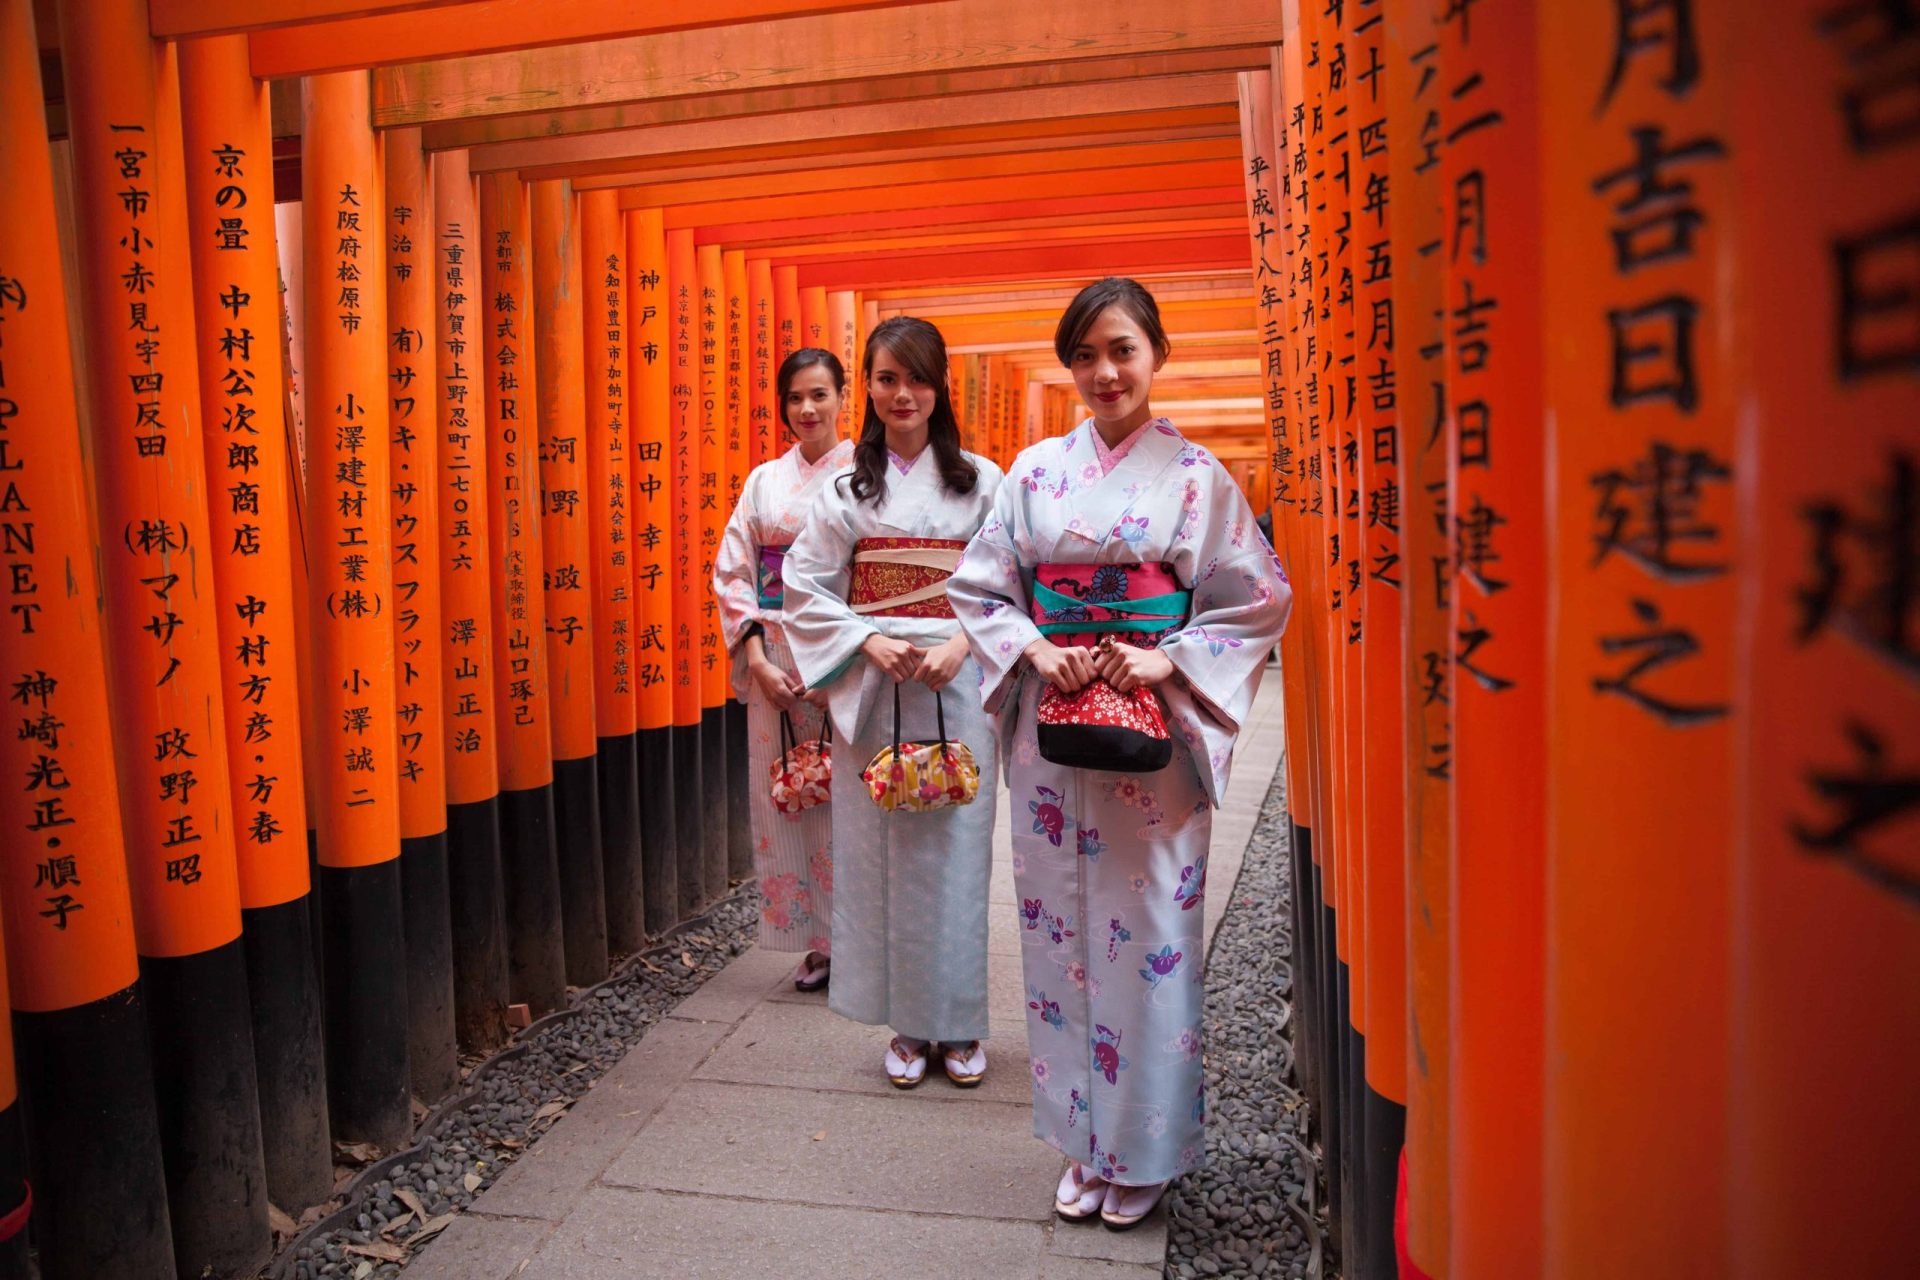 three women in kimono dress surrounded with orange posts